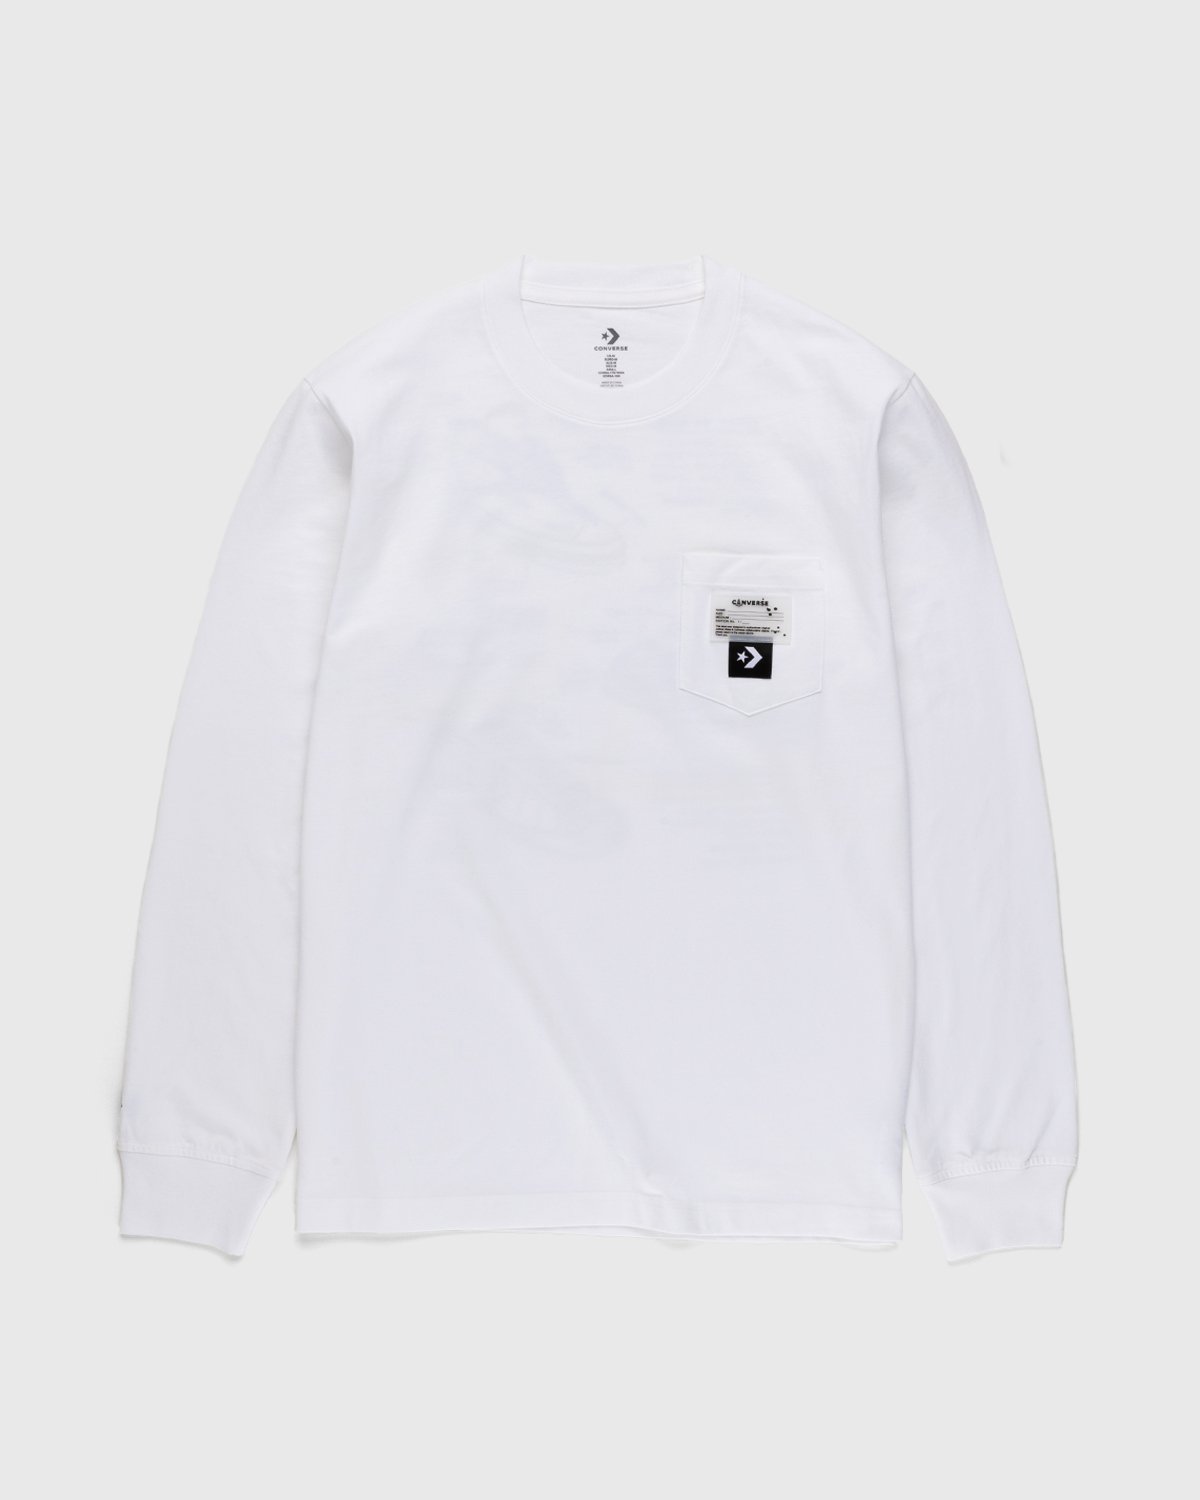 Converse x Joshua Vides - Long Sleeve Pocket Tee White - Clothing - White - Image 1